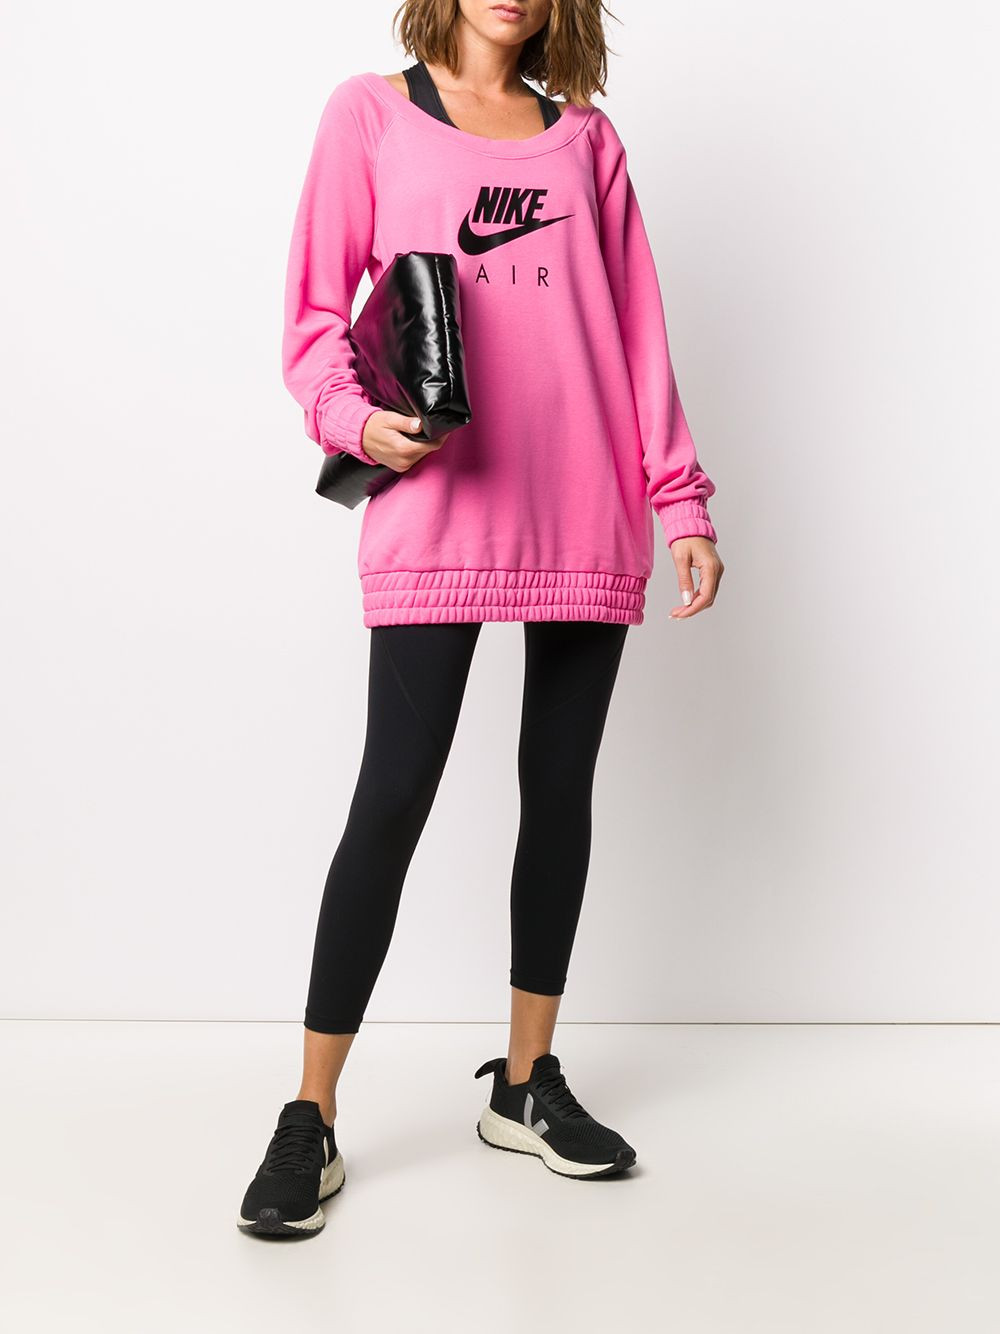 Nike Air oversized logo-print sweatshirt